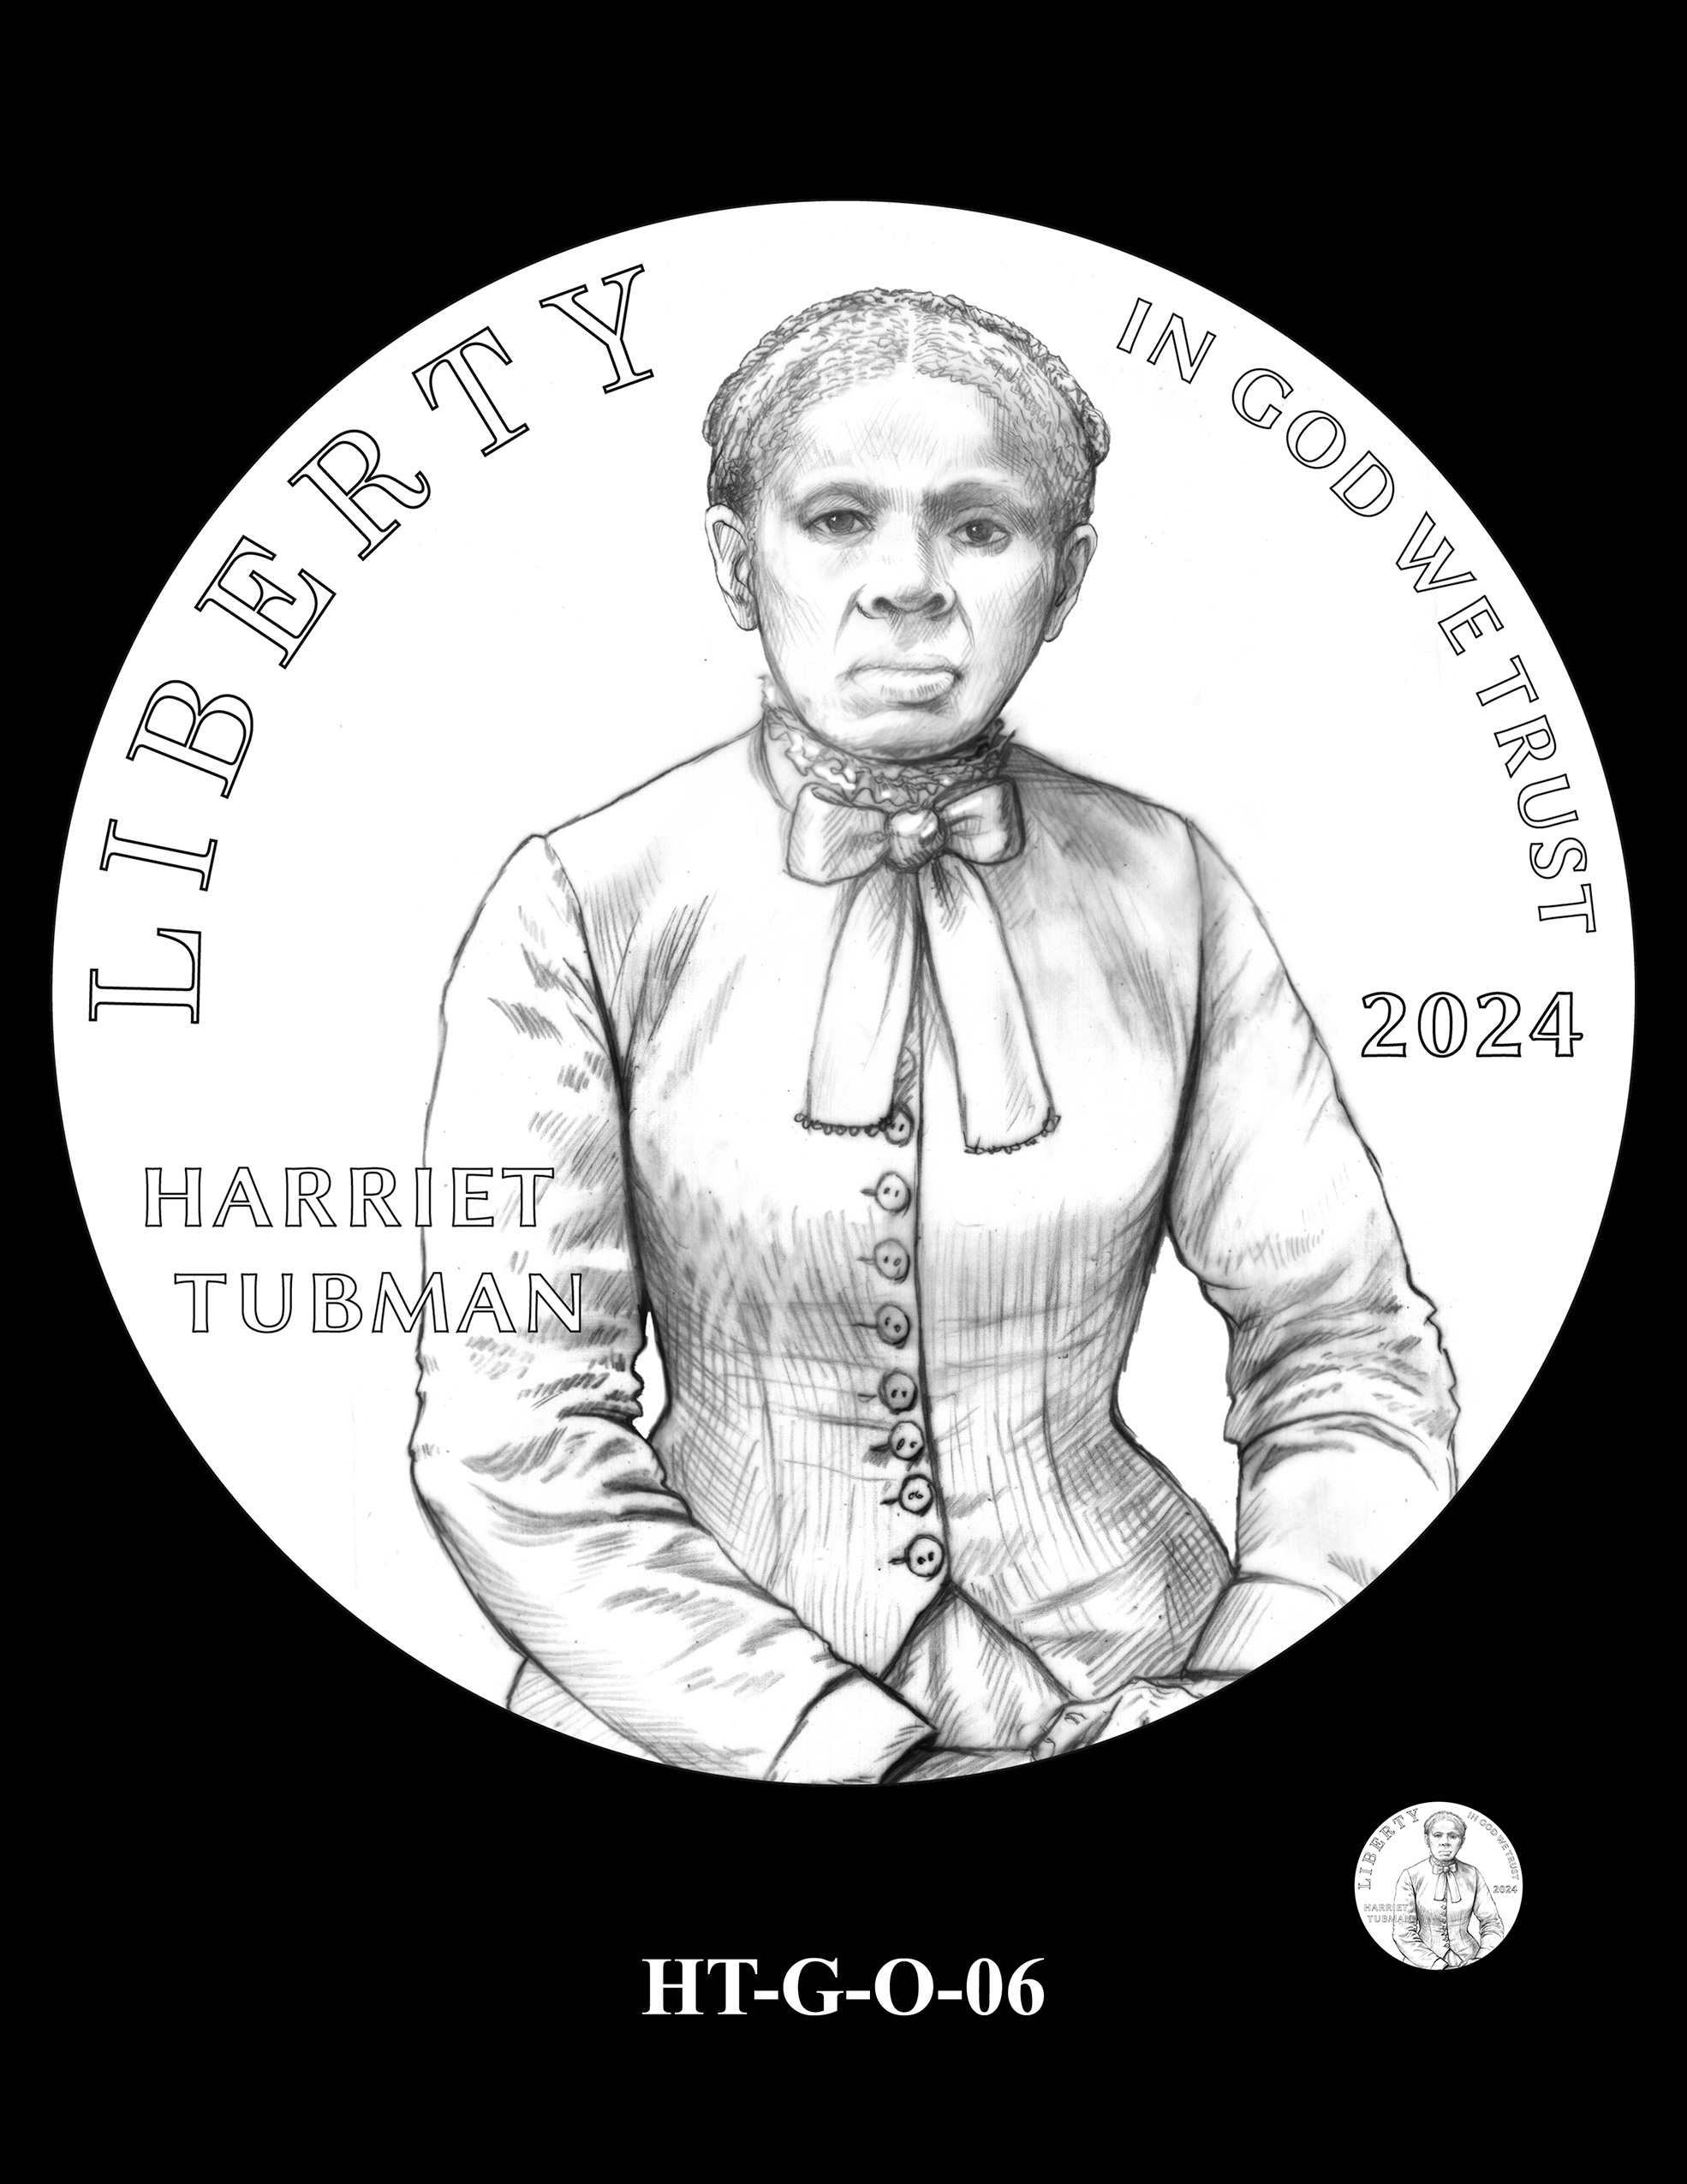 HT-G-O-06 -- Harriet Tubman